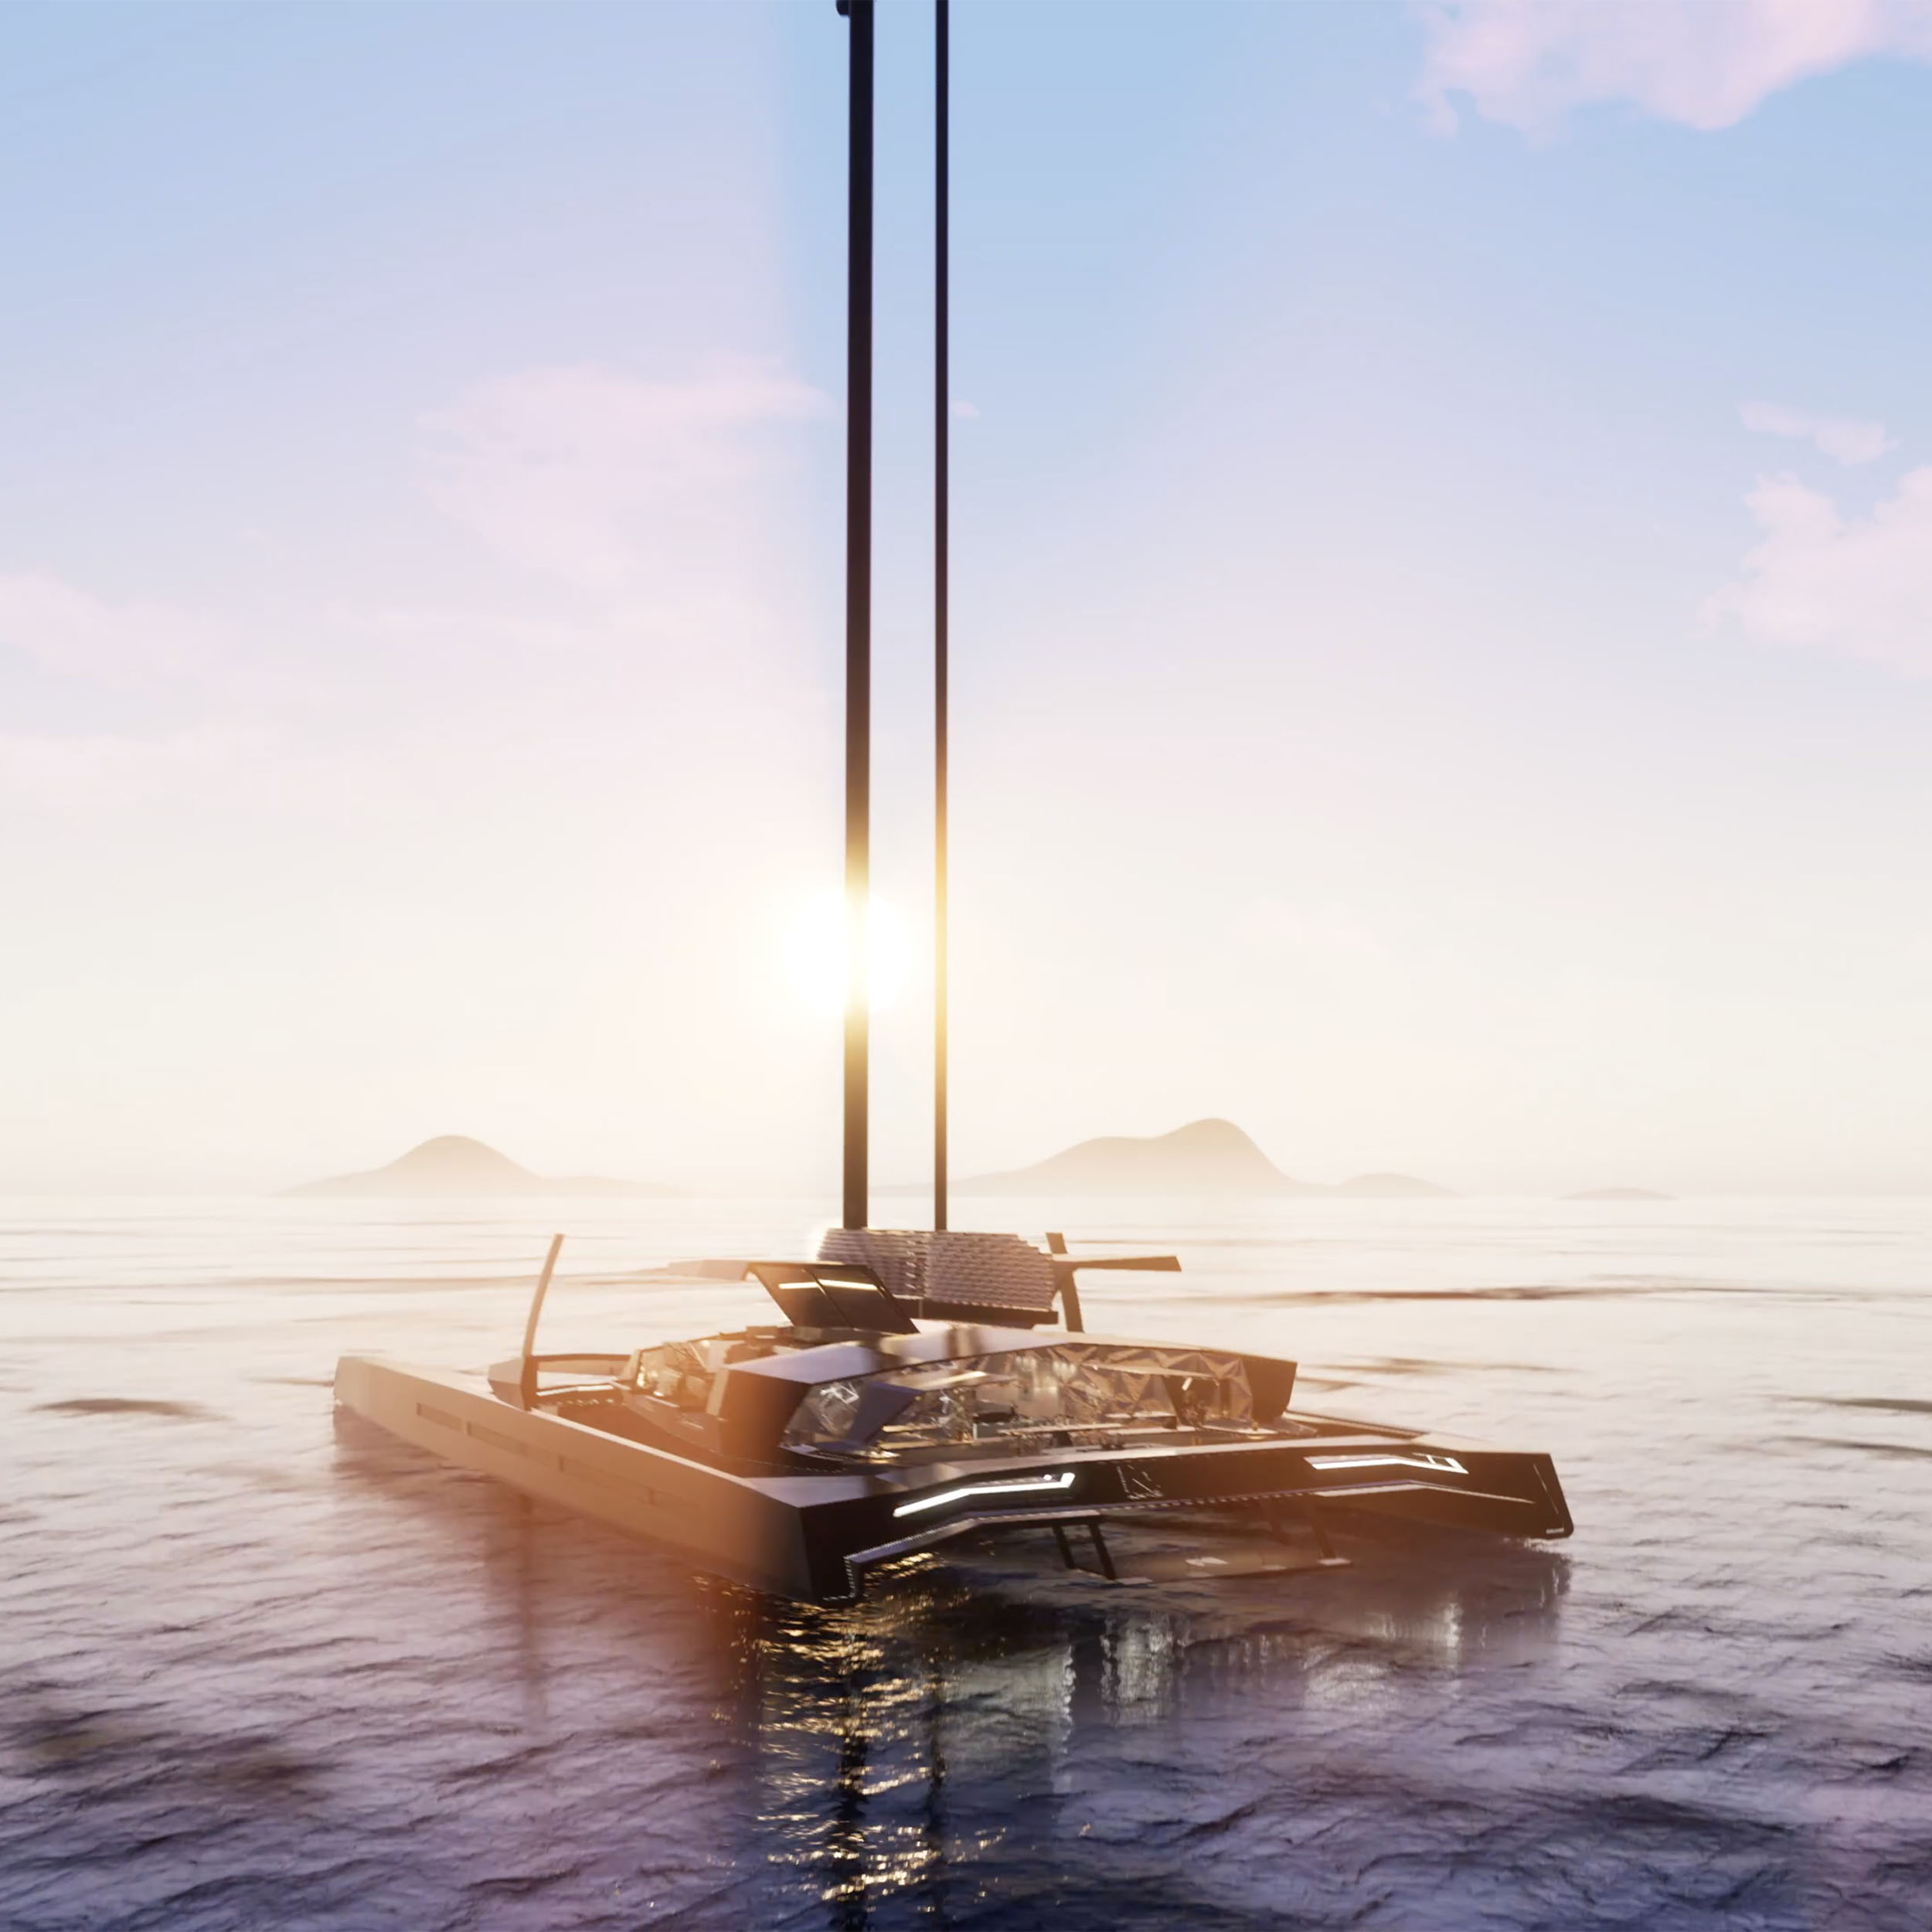 luxury hydrofoil yacht